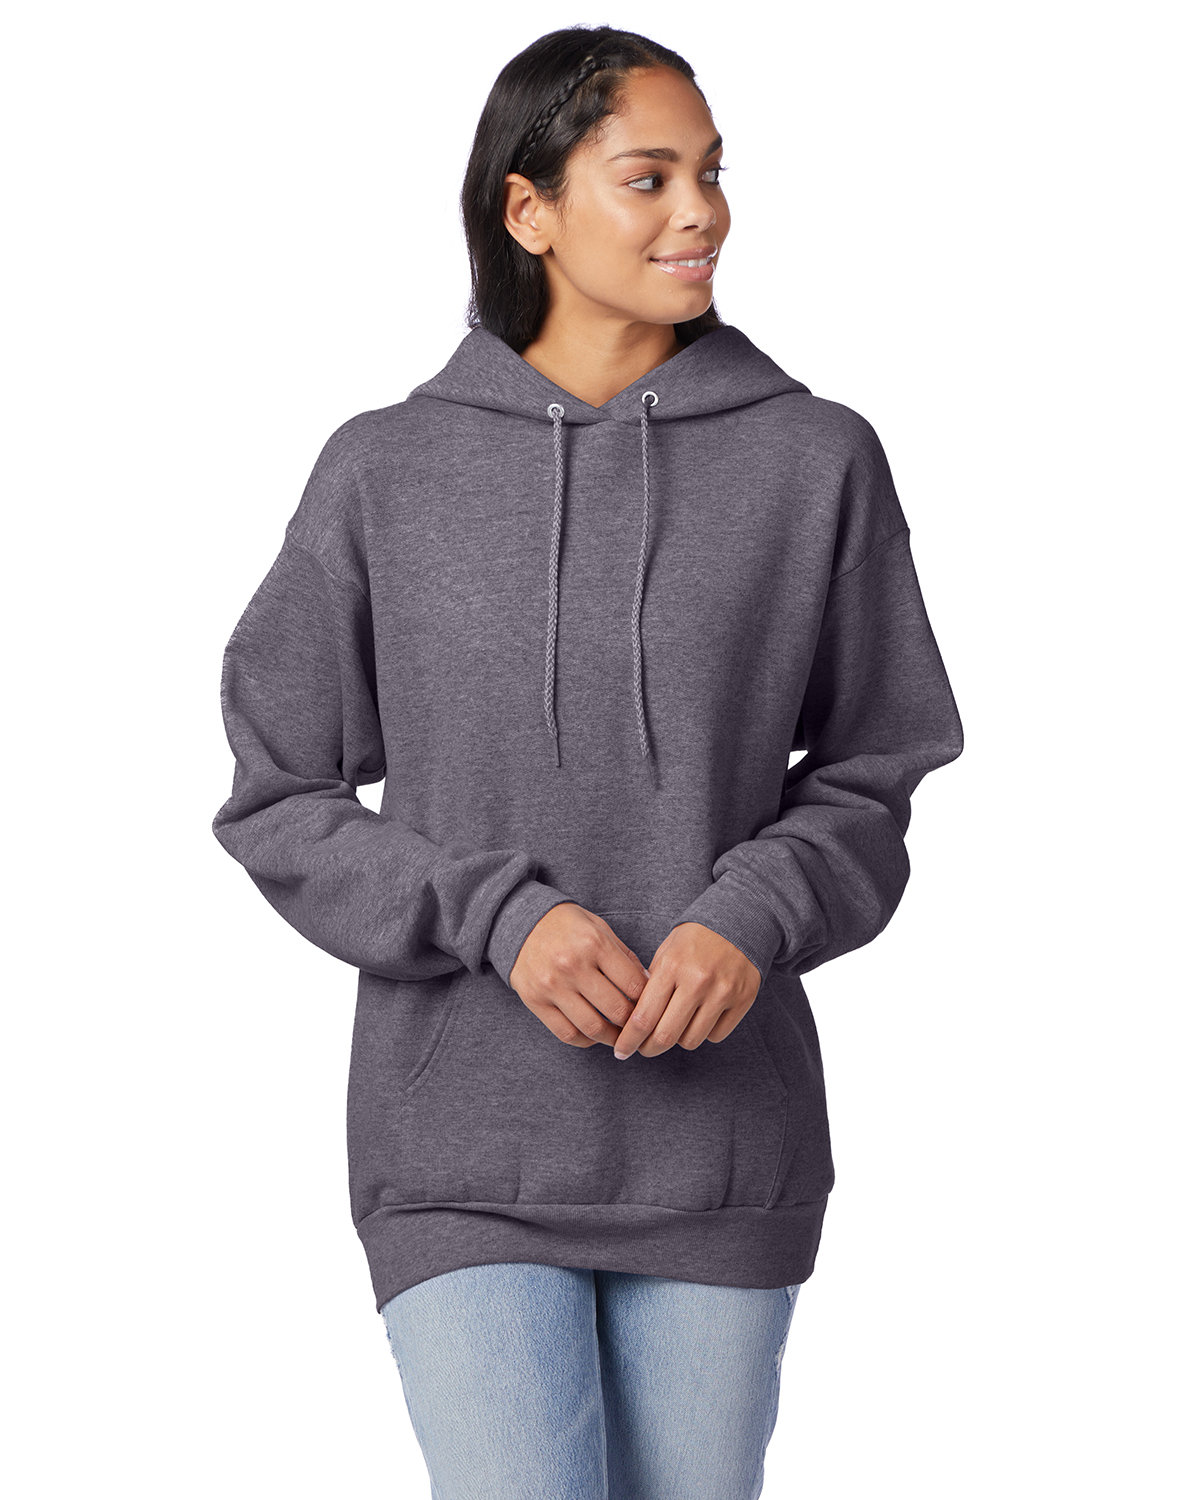 Pretreated Hanes P170 Ecosmart Hooded Sweatshirt – CheaterTee